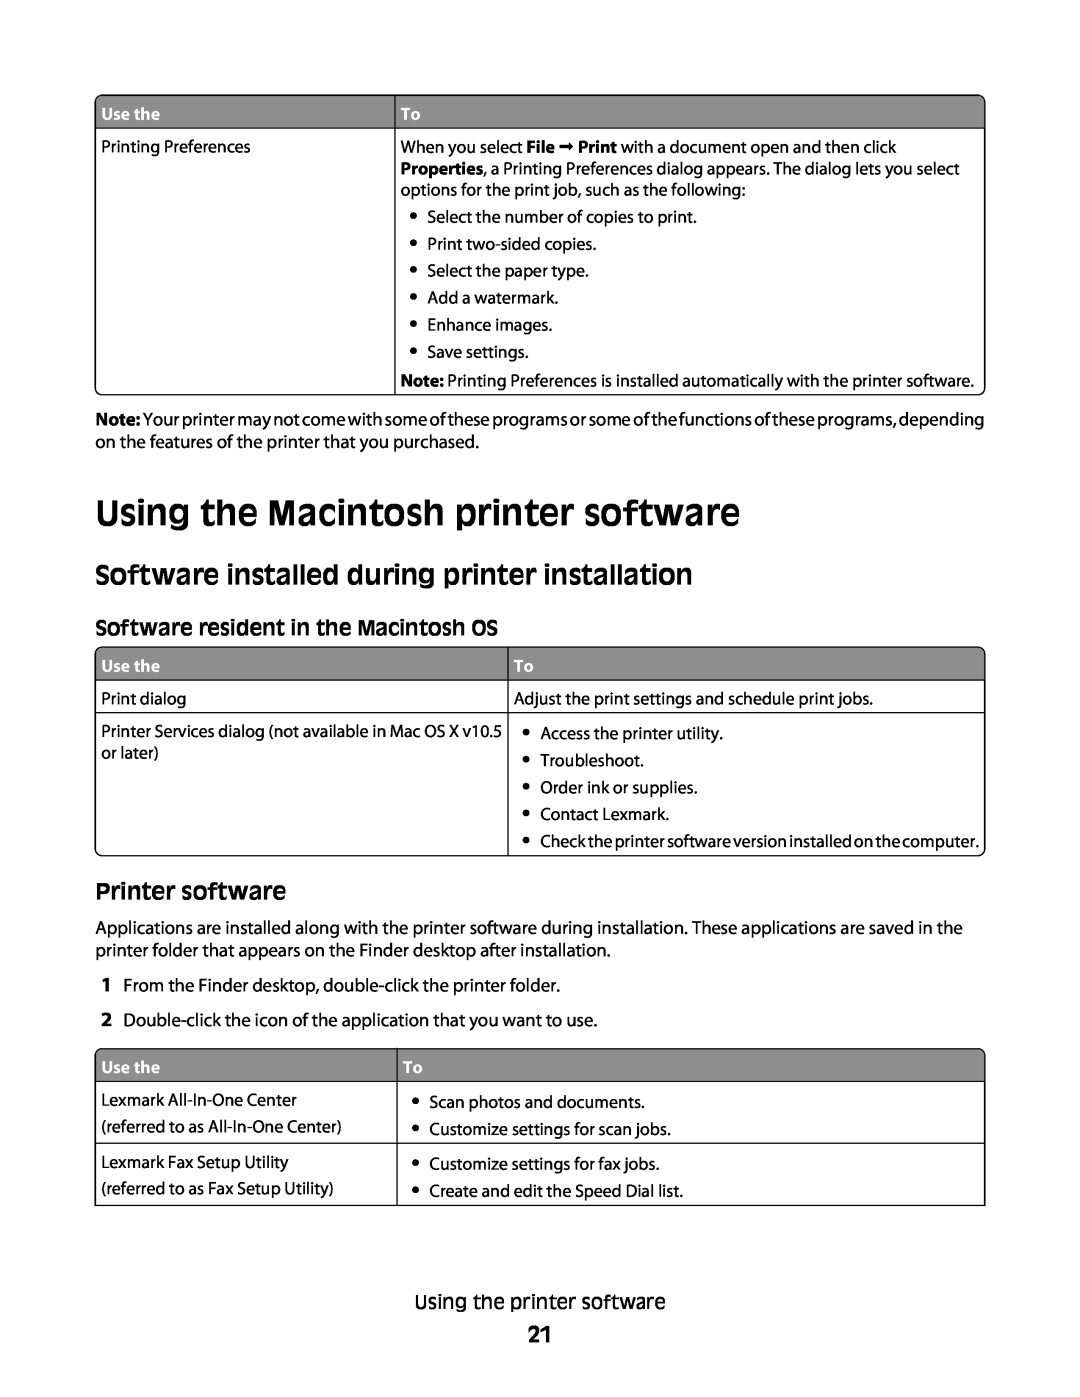 Lexmark 10E, 101 Using the Macintosh printer software, Software installed during printer installation, Printer software 